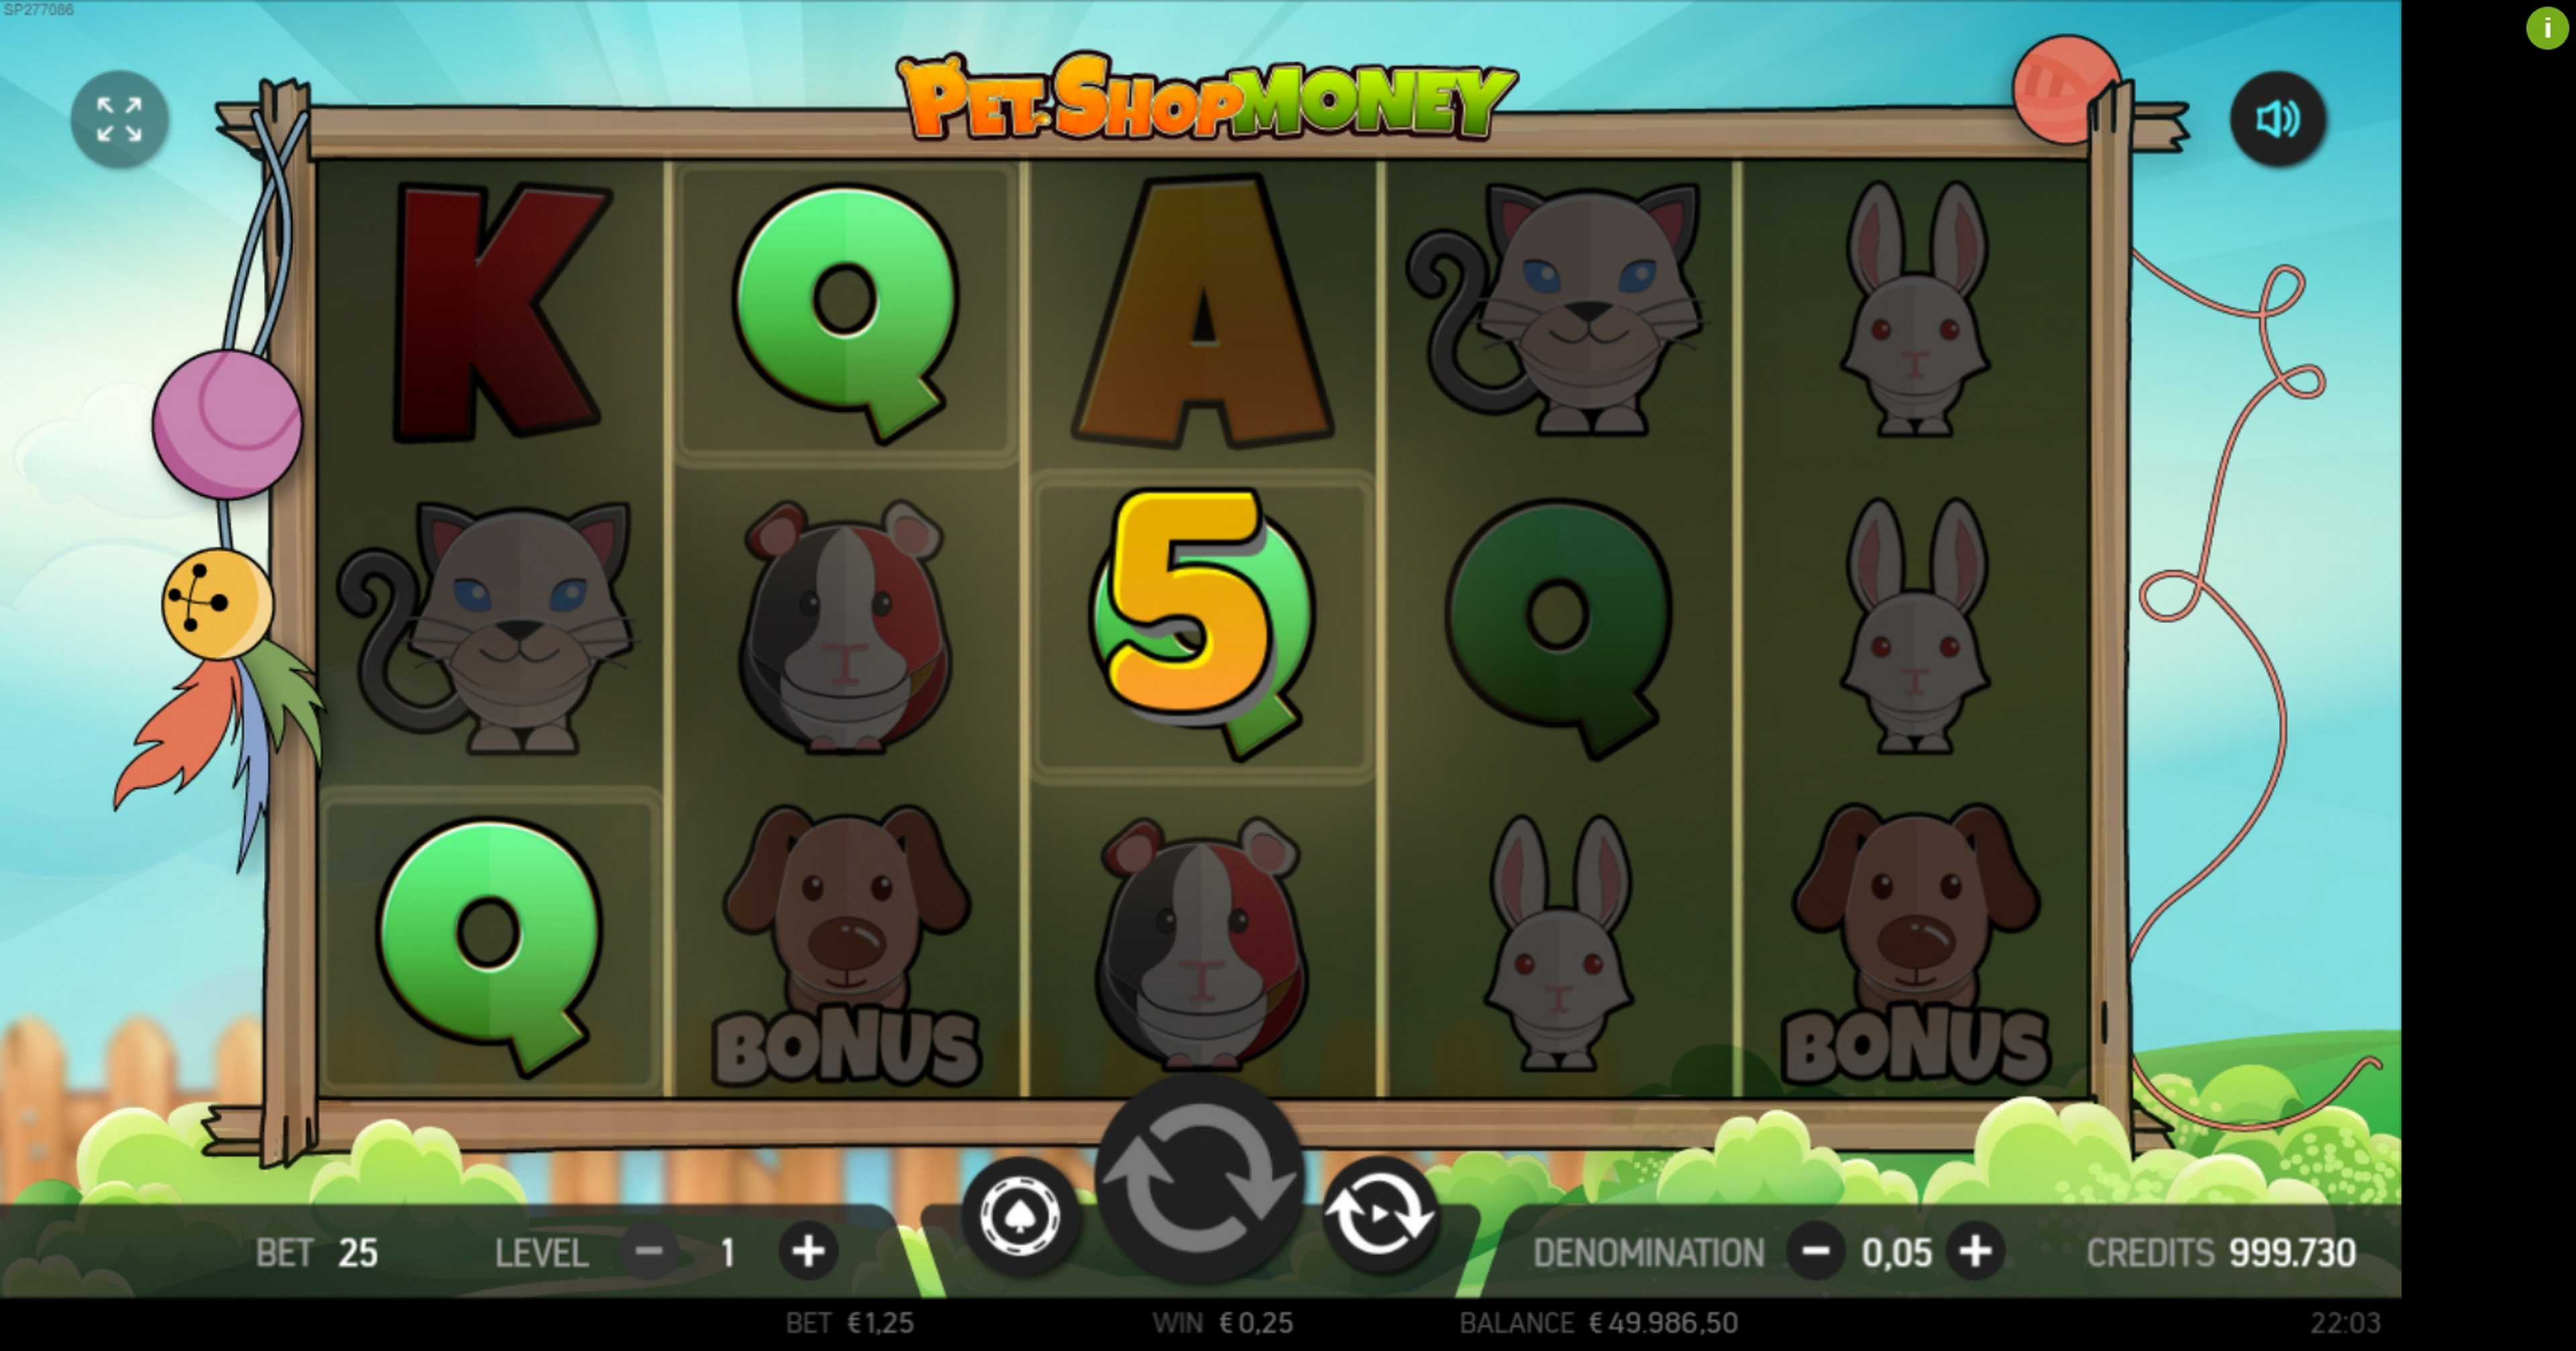 Win Money in Pet Shop Money Free Slot Game by FBM